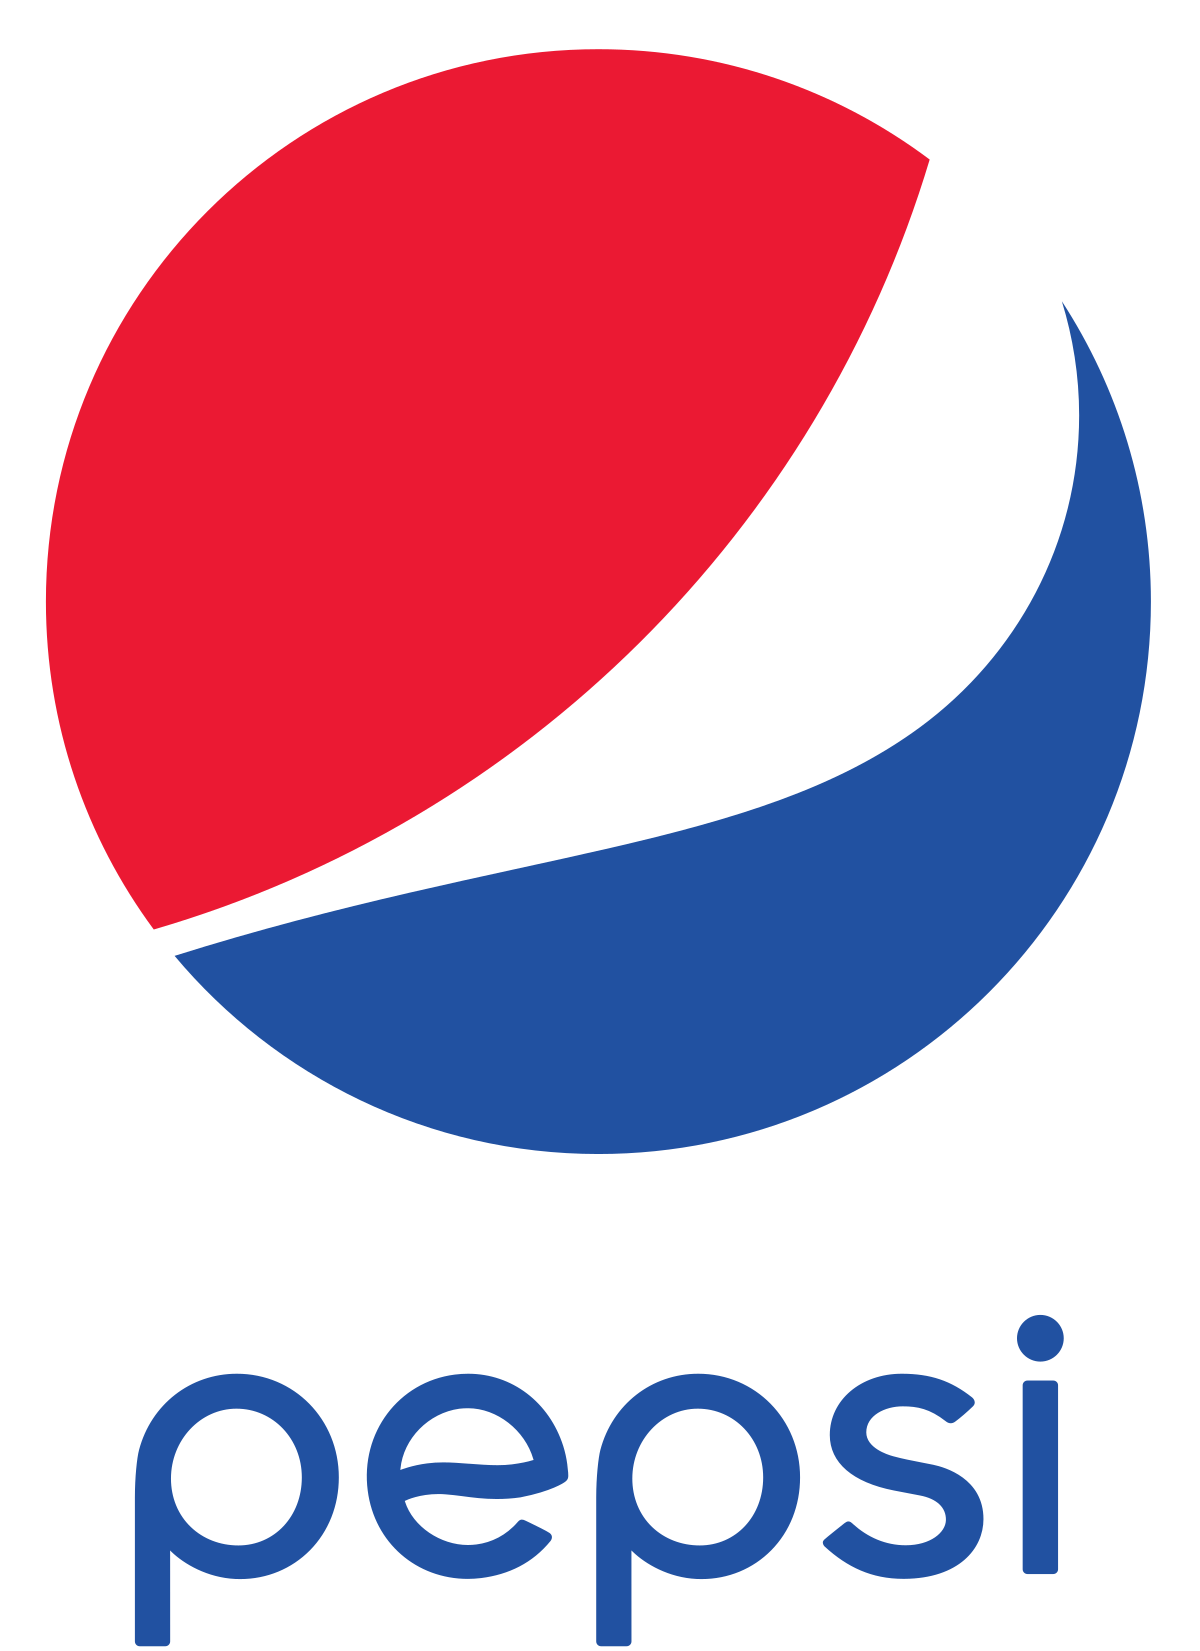 Pepsi_logo1.png